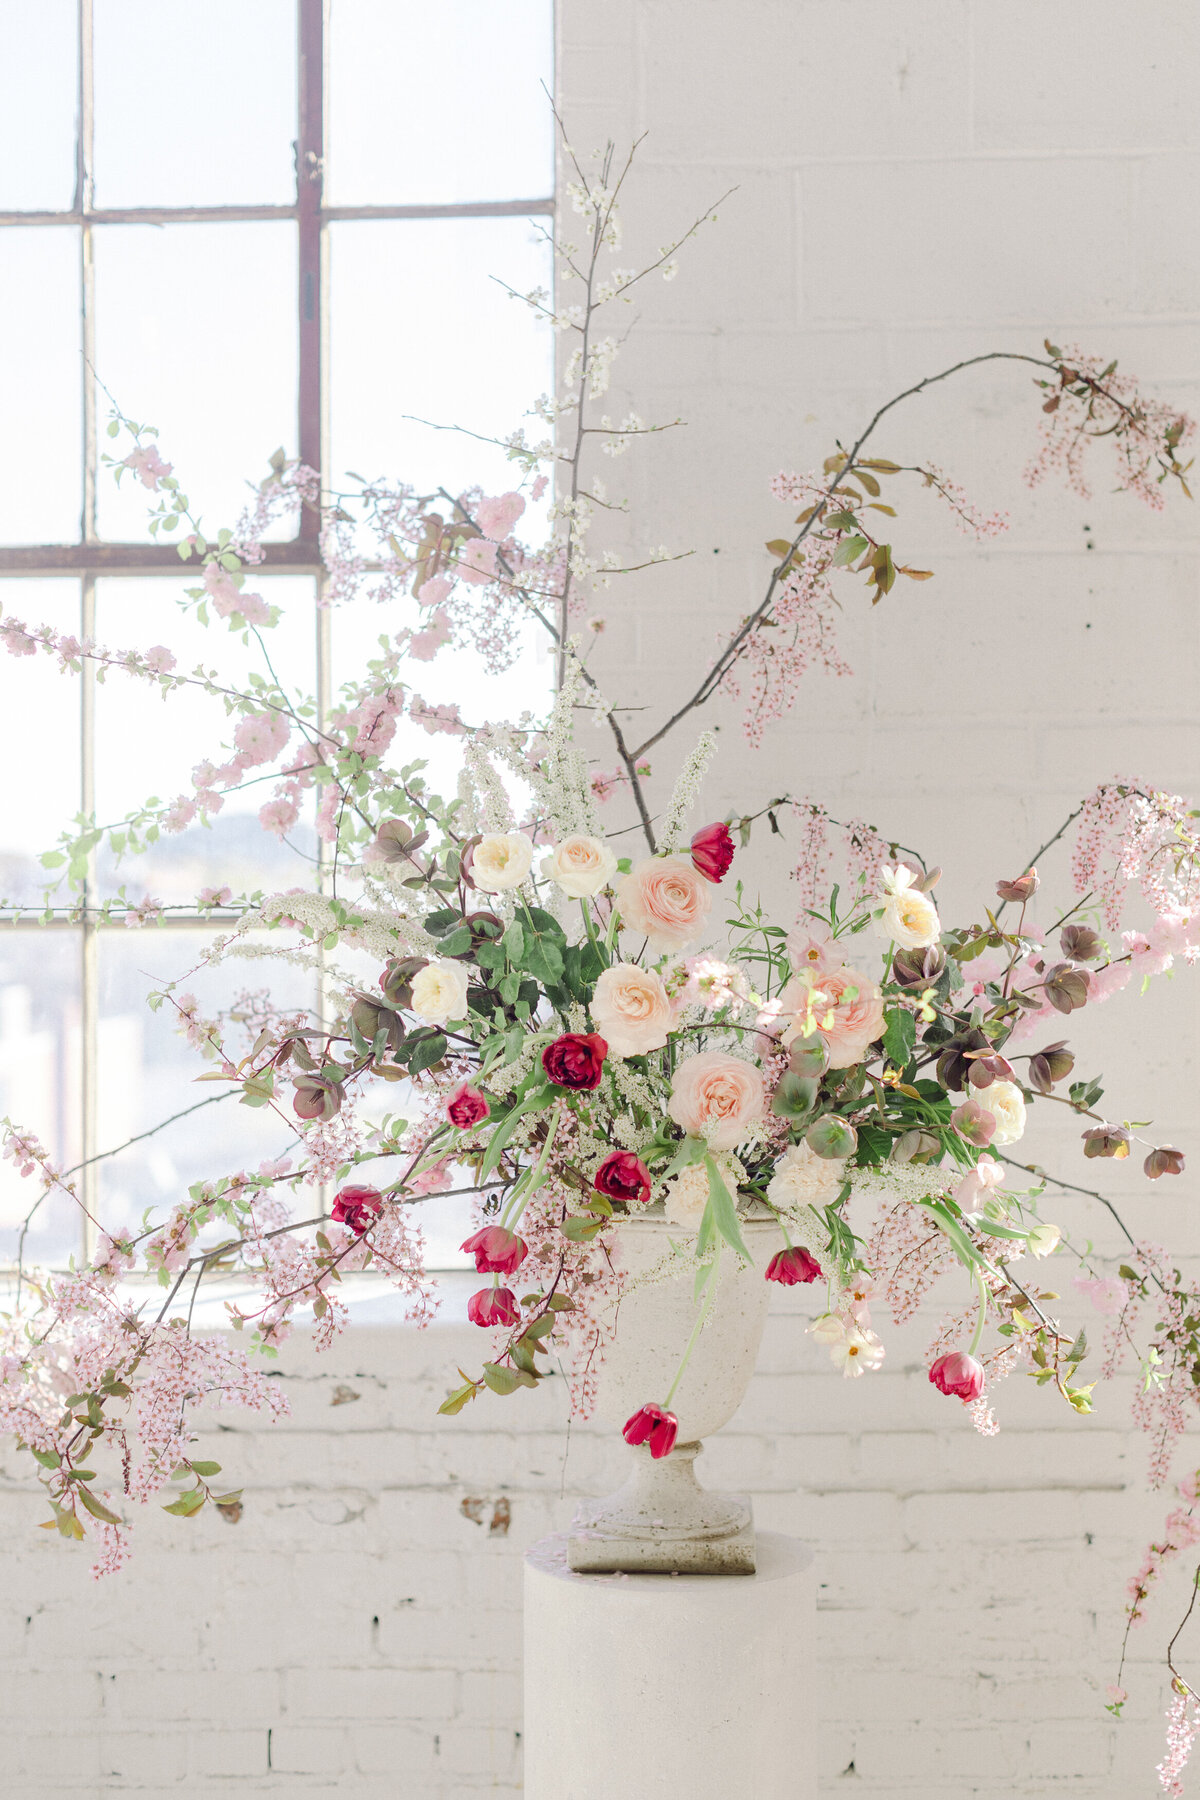 Atelier-Carmel-Wedding-Florist-GALLERY-Arrangements-28